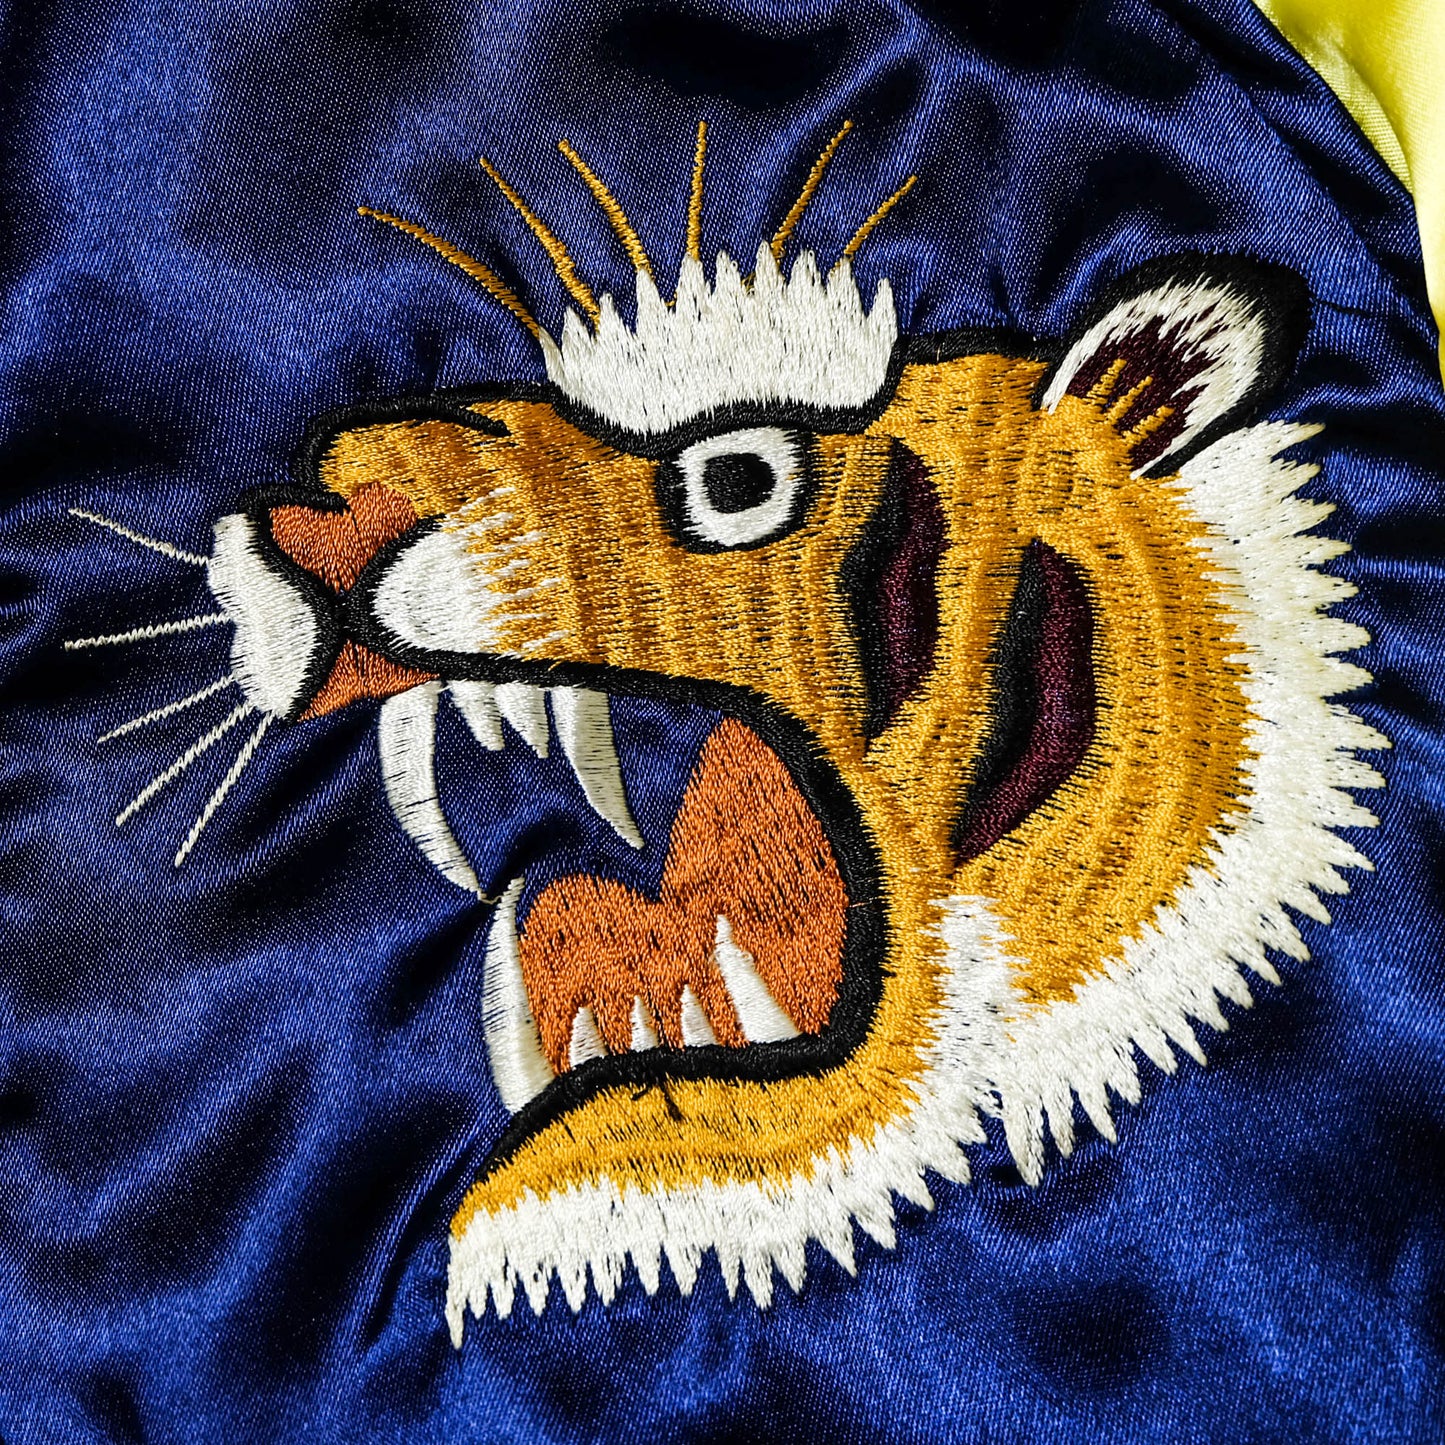 Classic Japanese Japan Okinawa Island Map Blue Yellow Tiger Dragon Tattoo Art Design Embroidered Embroidery Reversible Sukajan Souvenir Sukajum Skajum Tattoo Art Design Yokosuka Jumper Bomber Jacket ( Size : M - L )